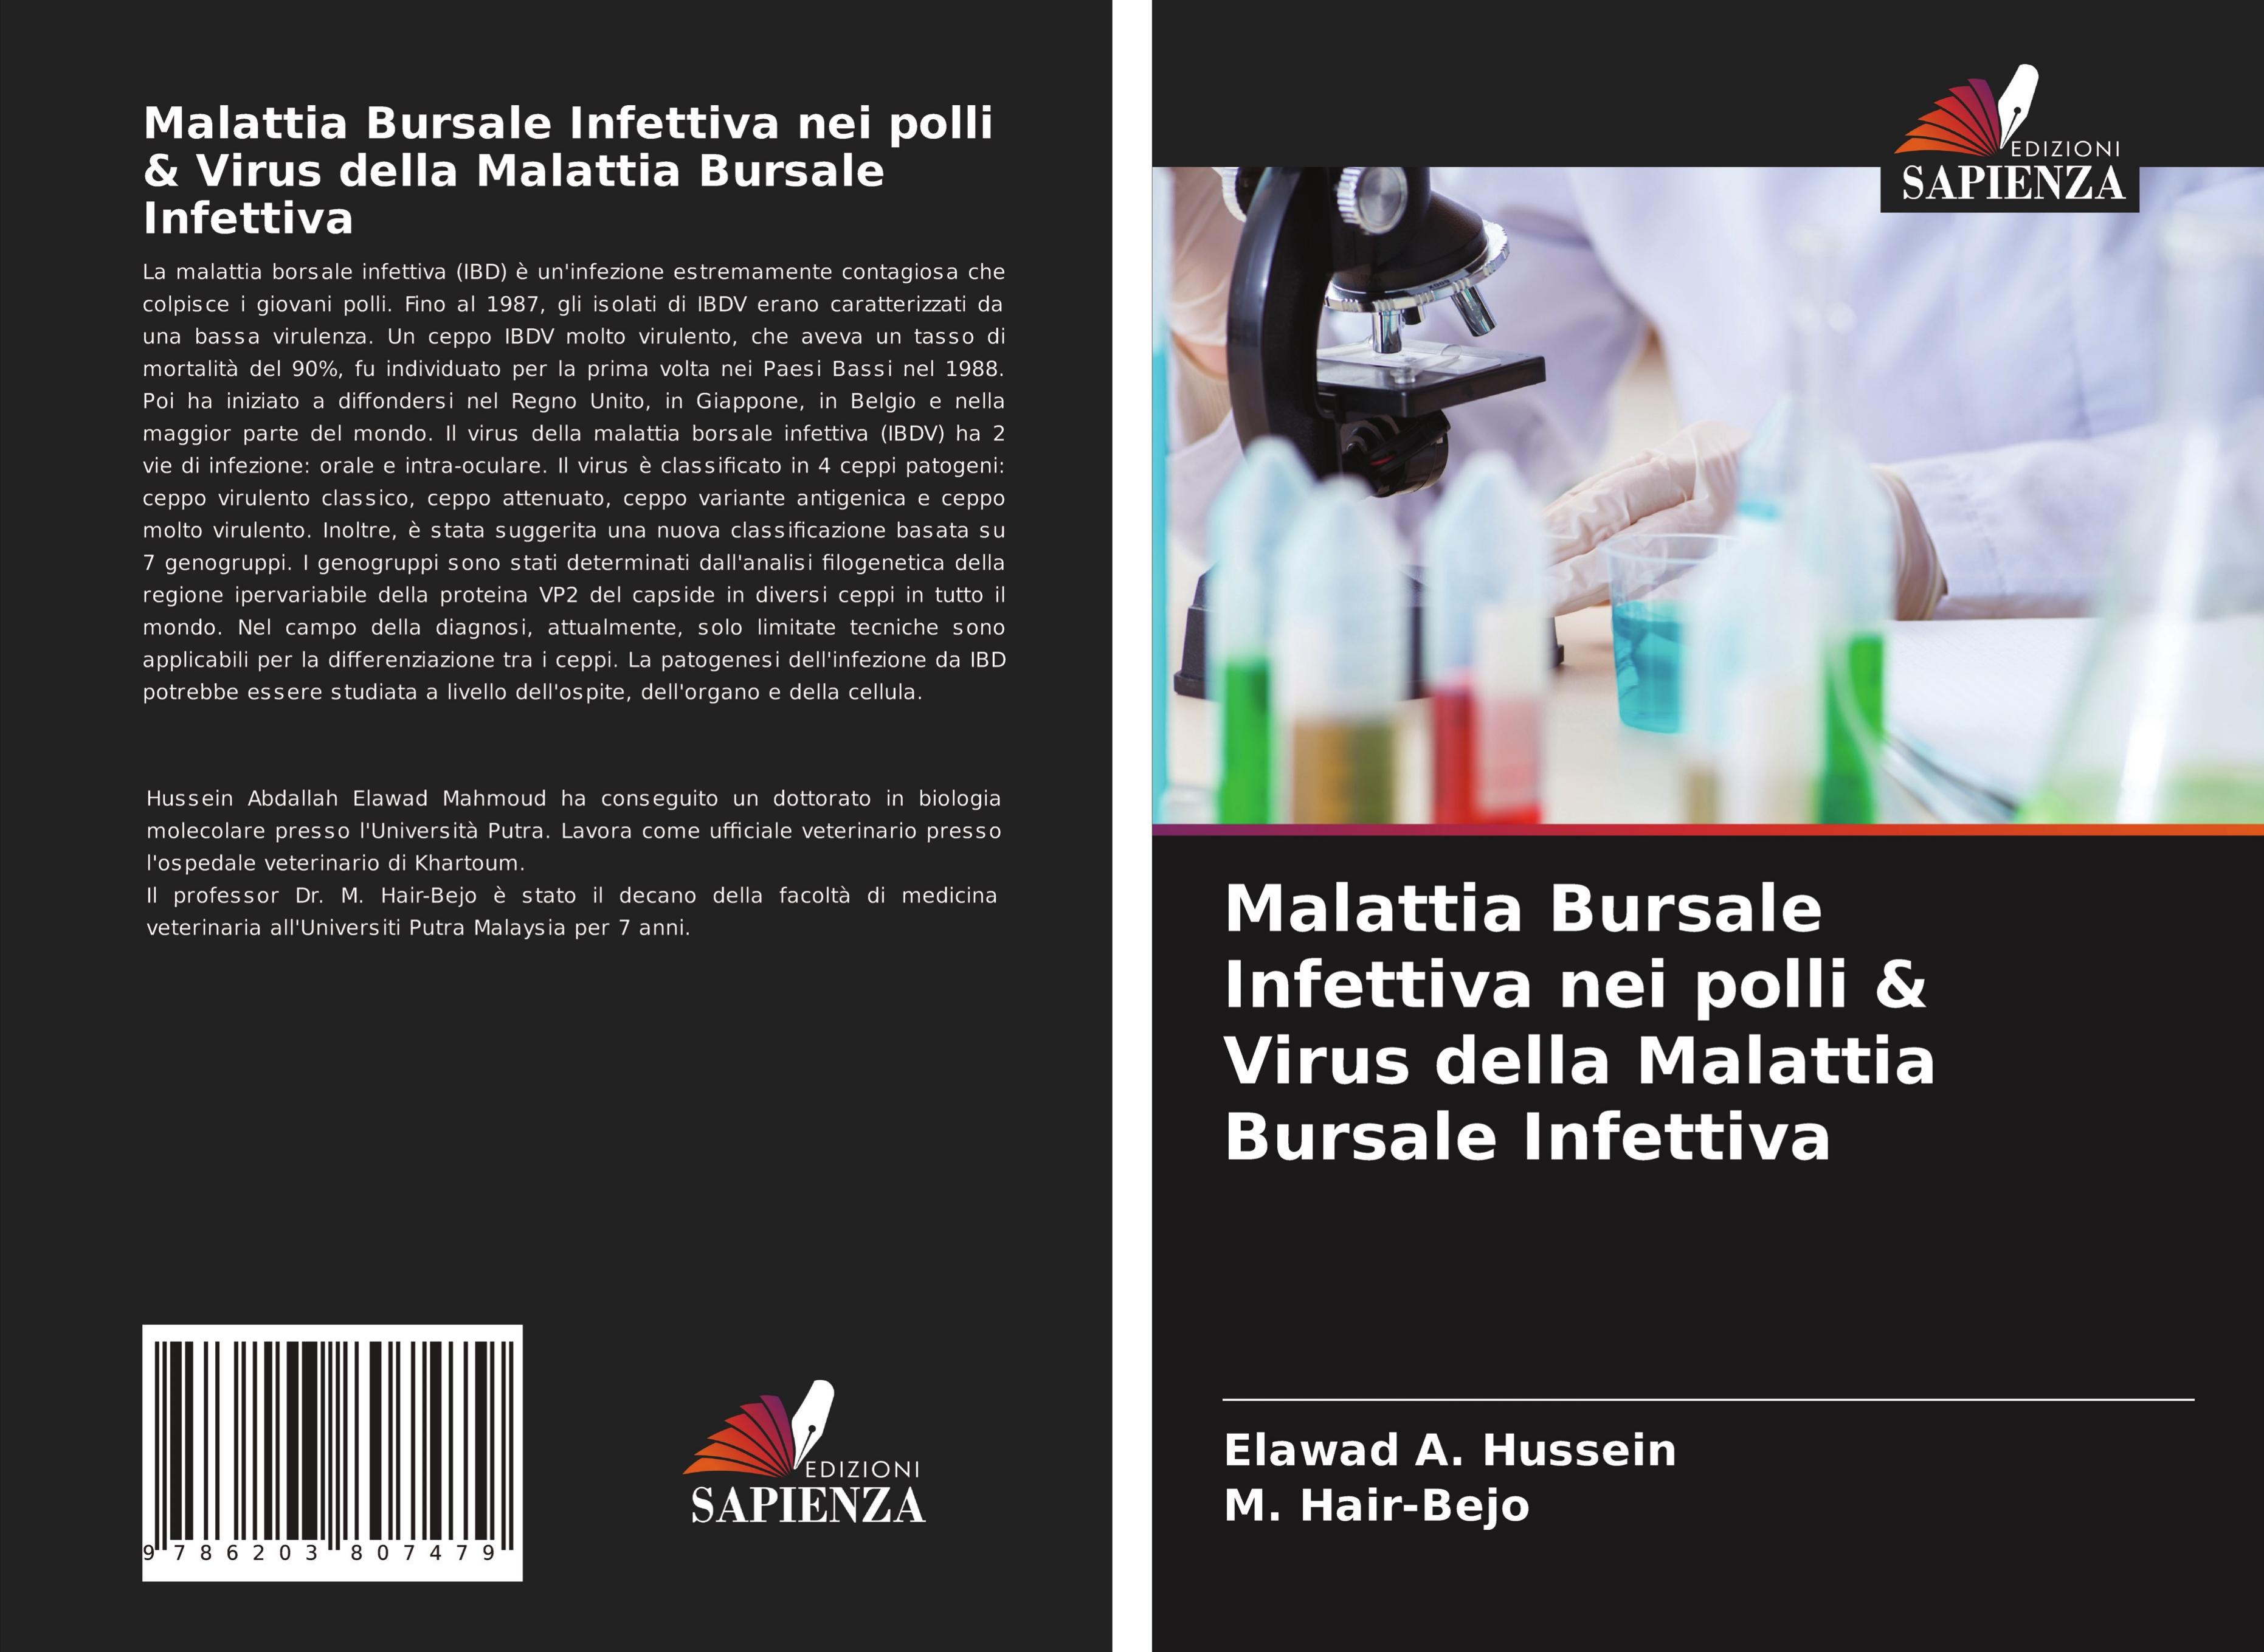 Malattia Bursale Infettiva nei polli & Virus della Malattia Bursale Infettiva - A. Hussein, Elawad Hair-Bejo, M.